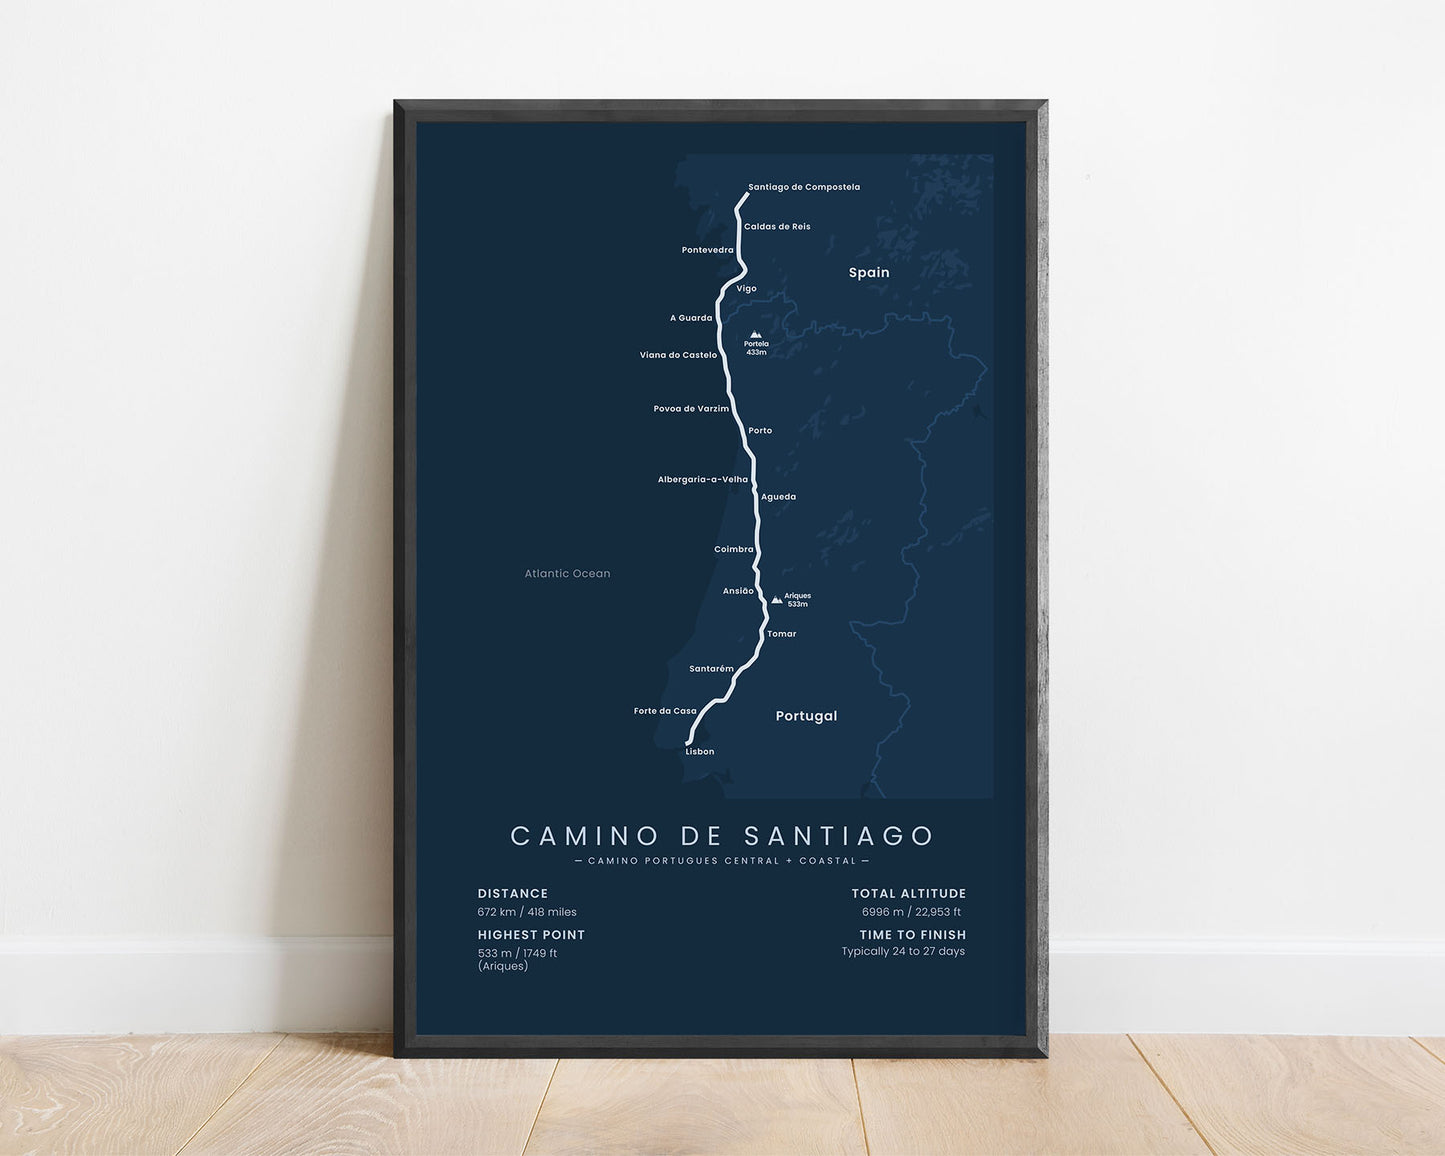 Camino de Santiago (Lisbon to Porto to Santiago de Compostela) hiking trail poster with blue background